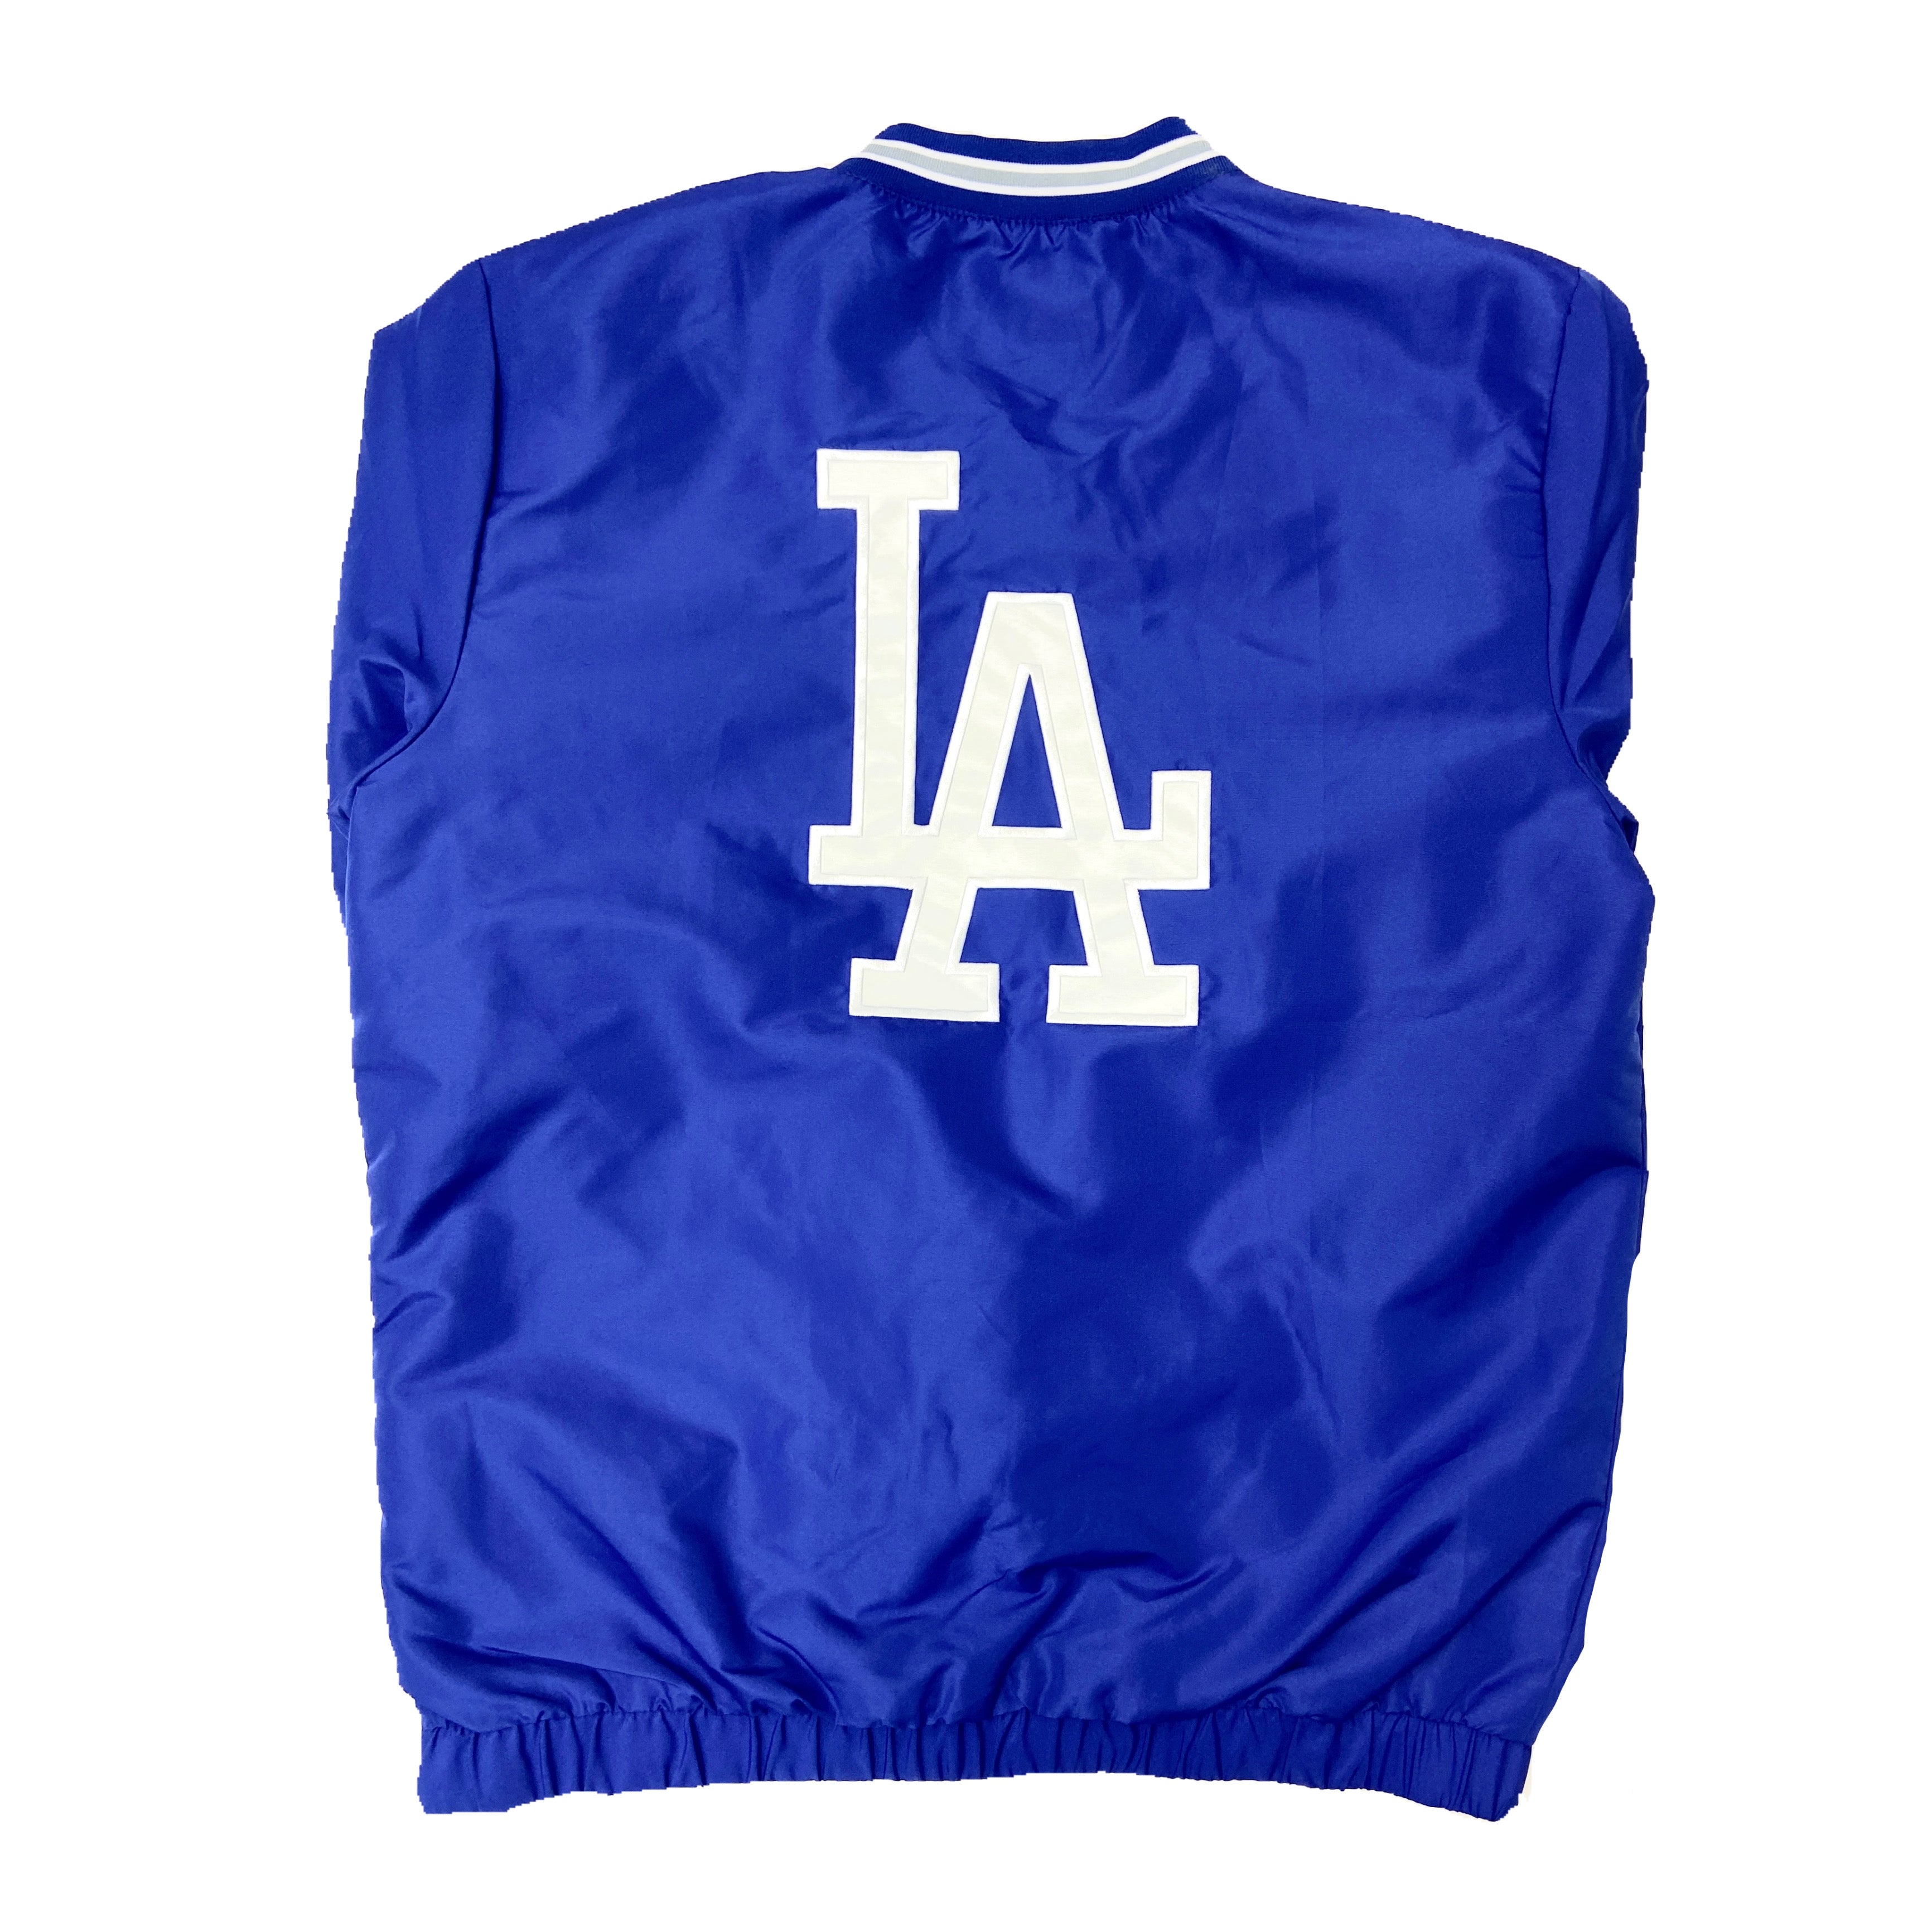 Vintage LOS ANGELES DODGERS Pullover Genuine Merchandise by 